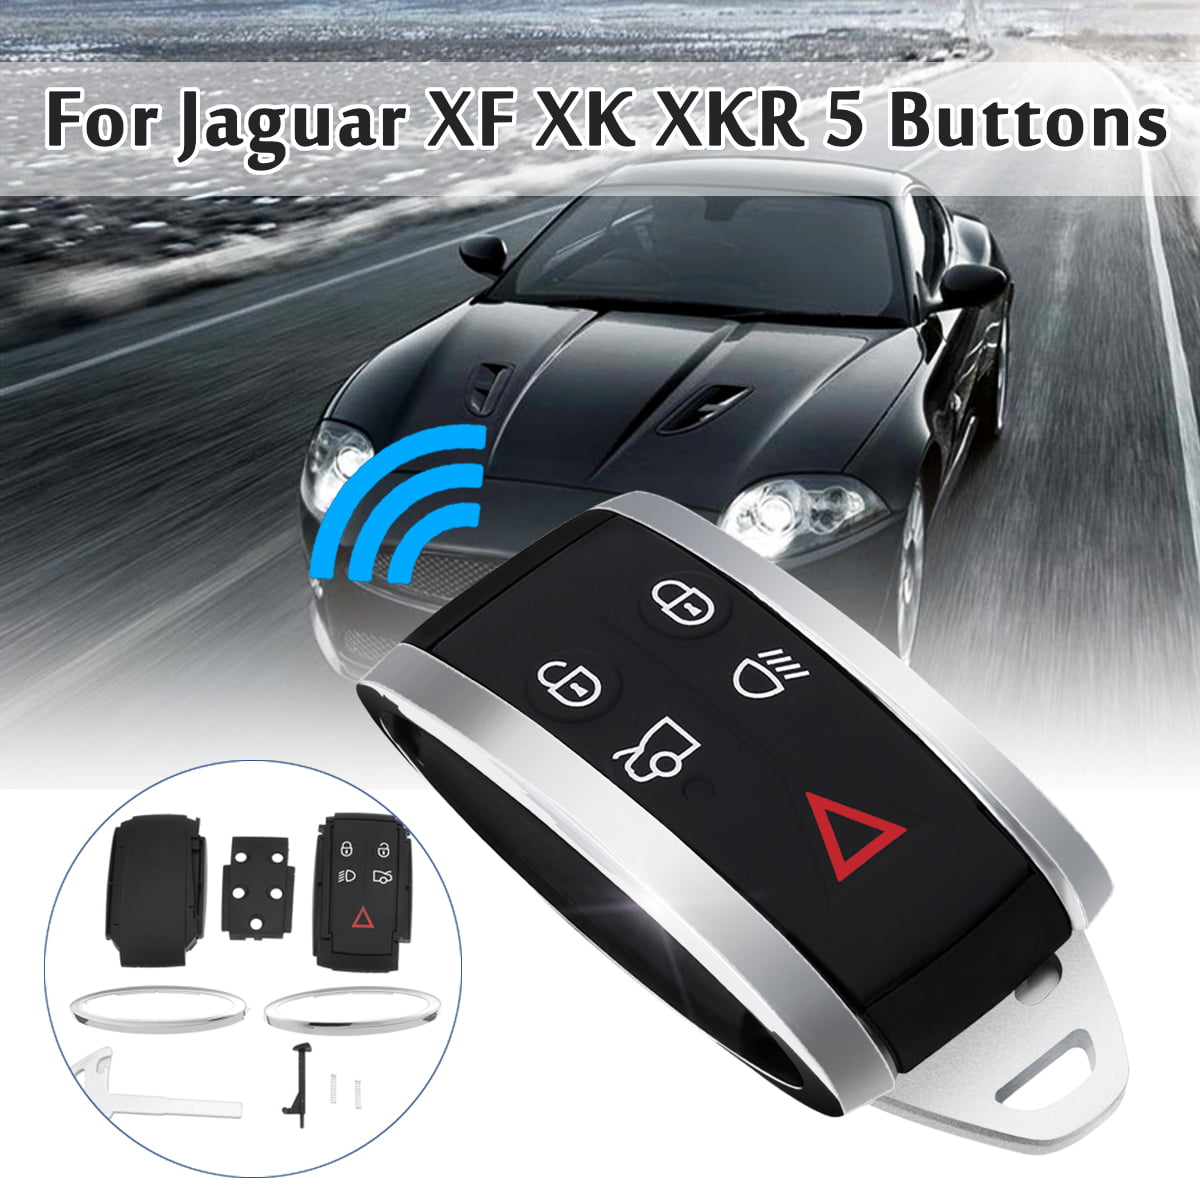 5 Button Car Remote Key Fob Shell Case for Jaguar XF 2009-2012 